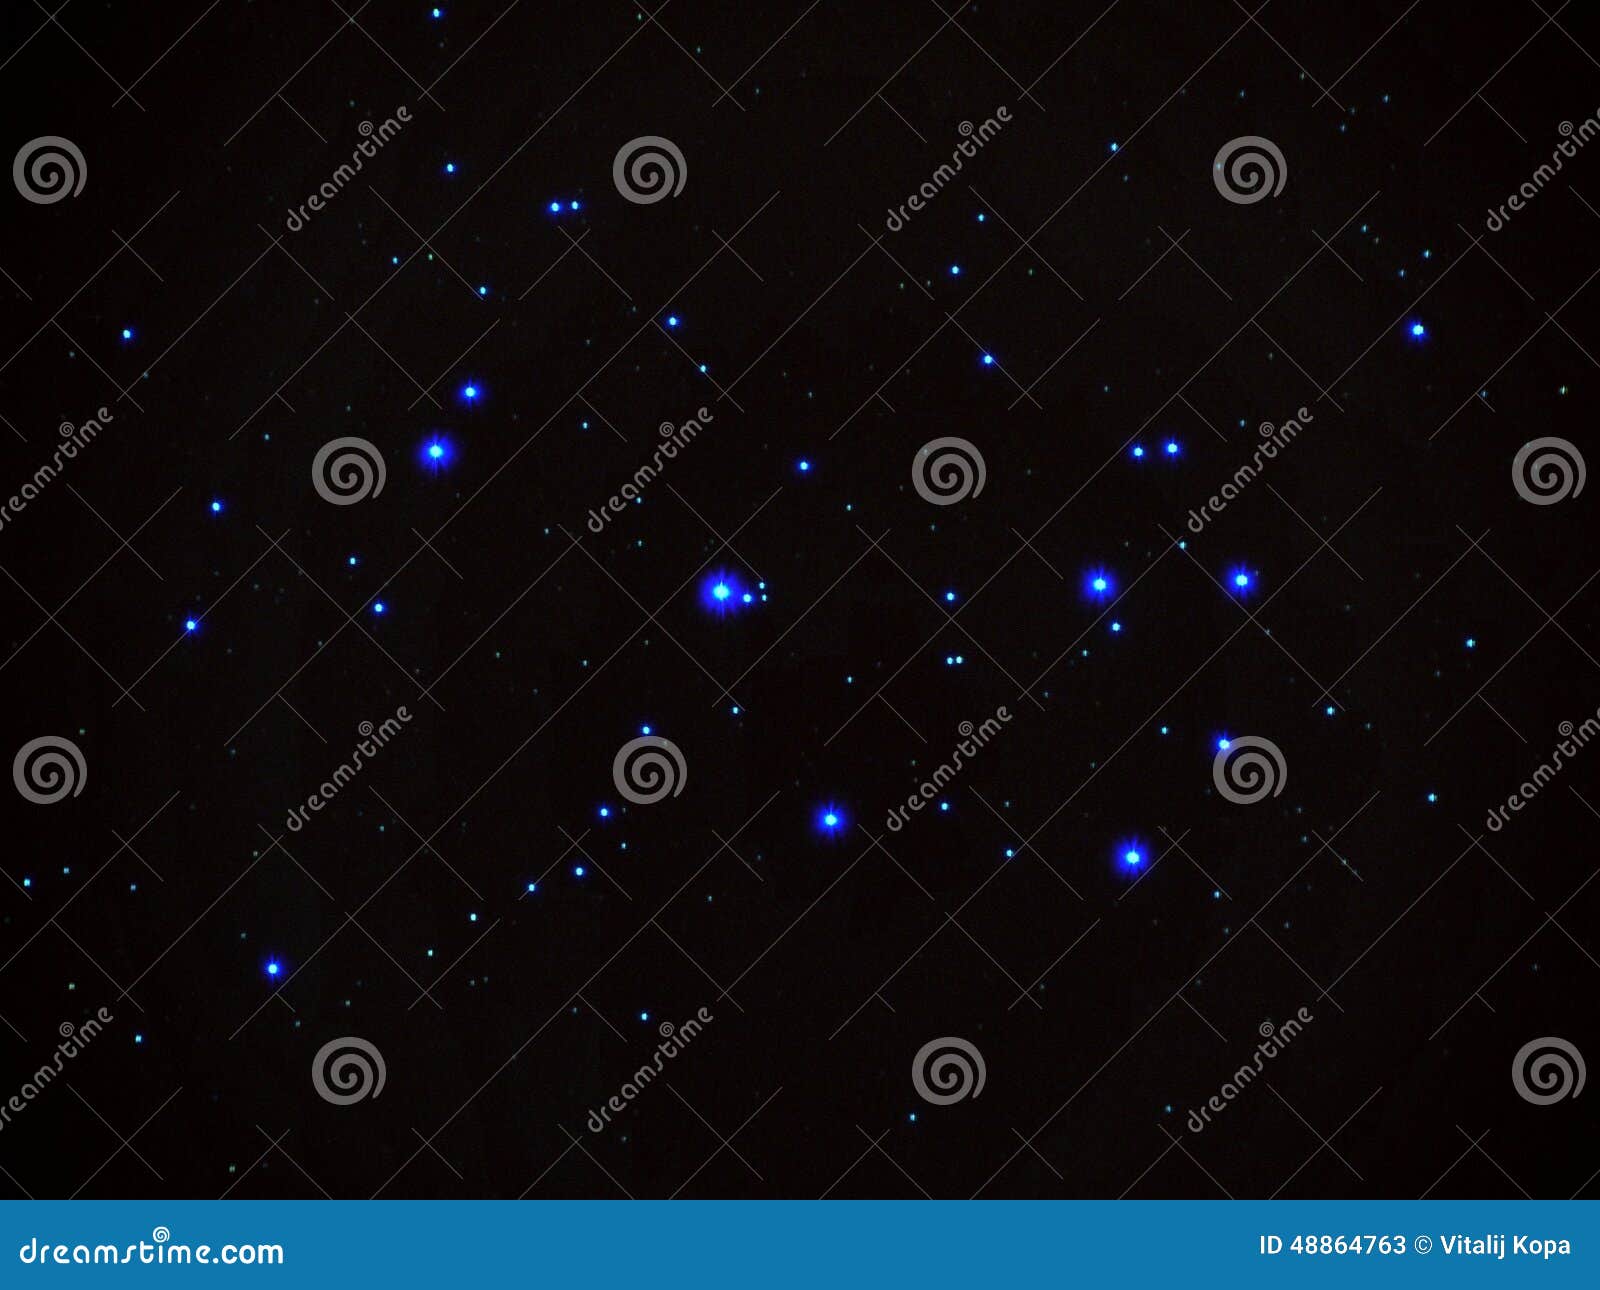 universe stars, pleiades opern cluster m45 in night sky